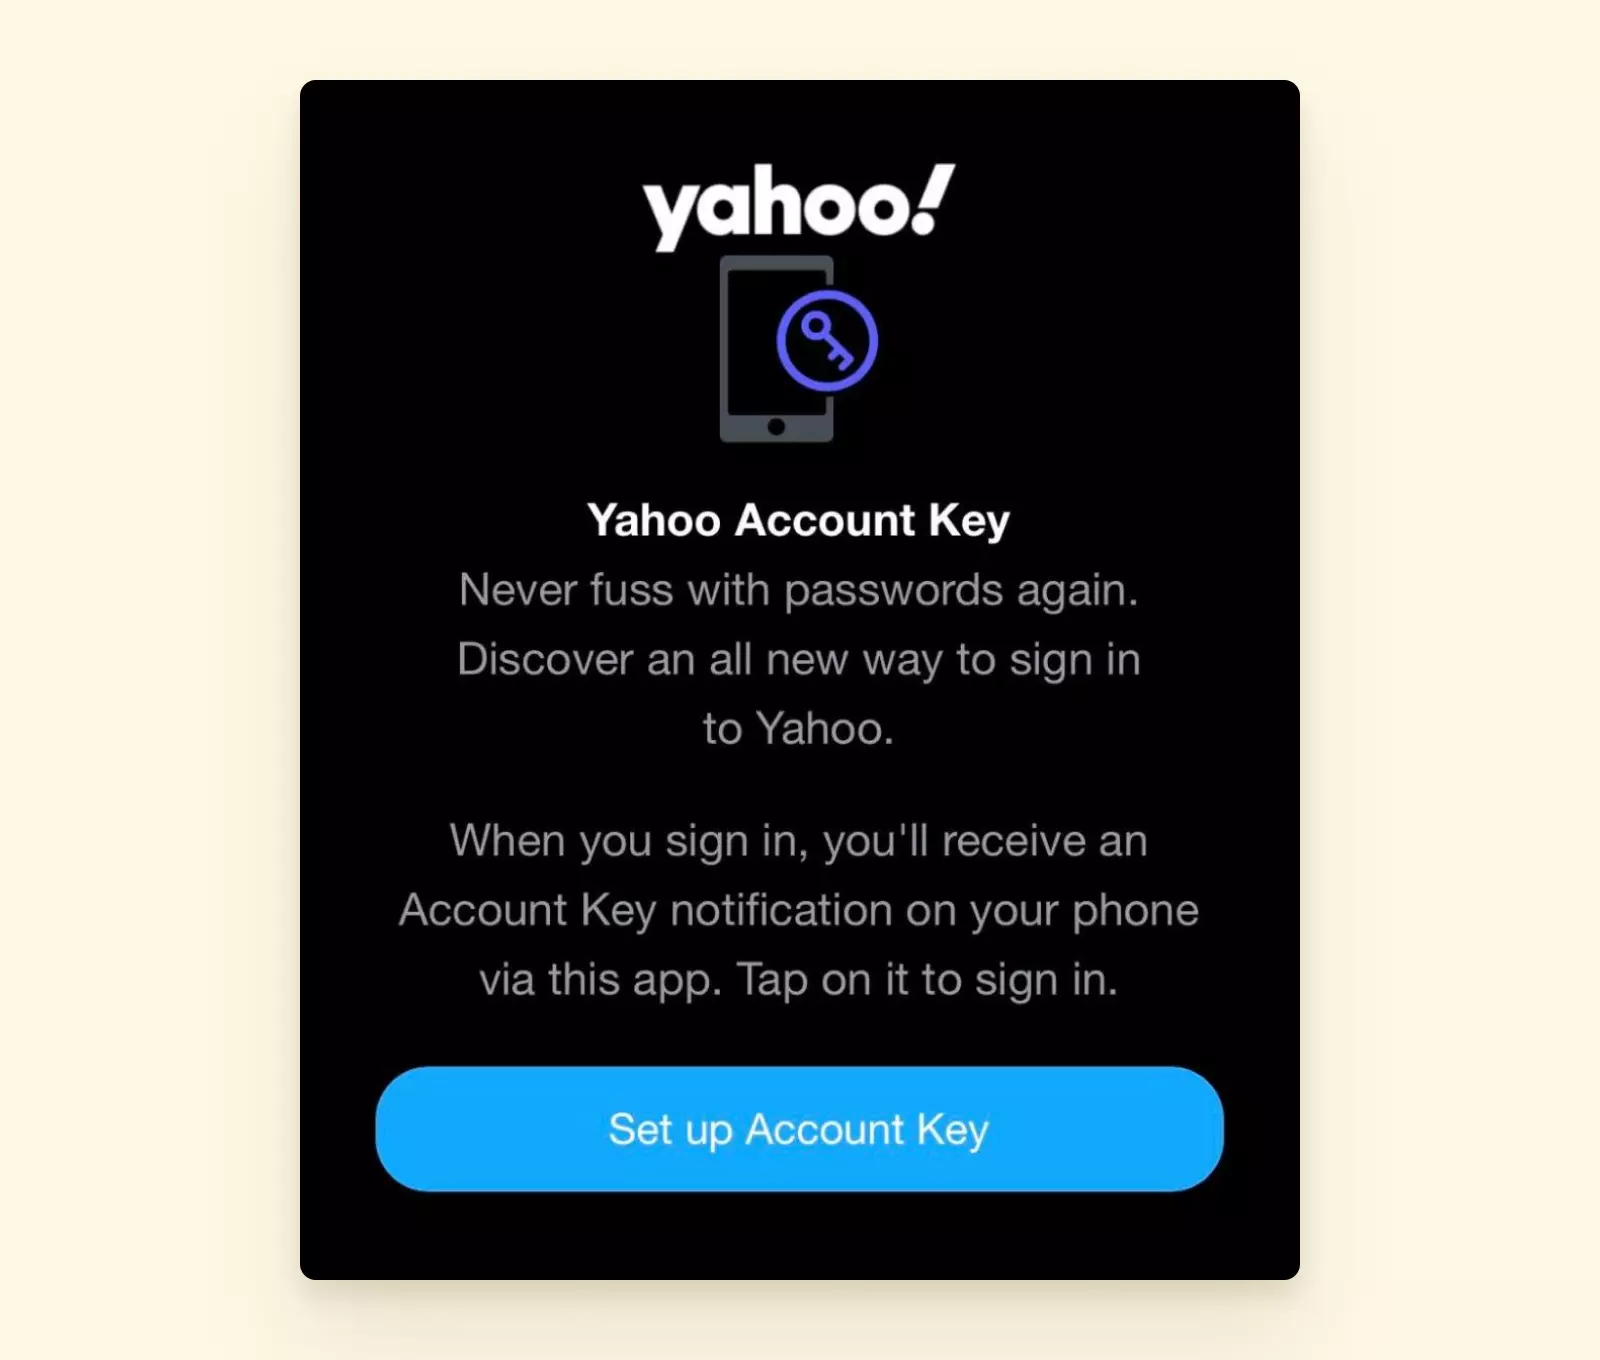 Yahoo account key information window